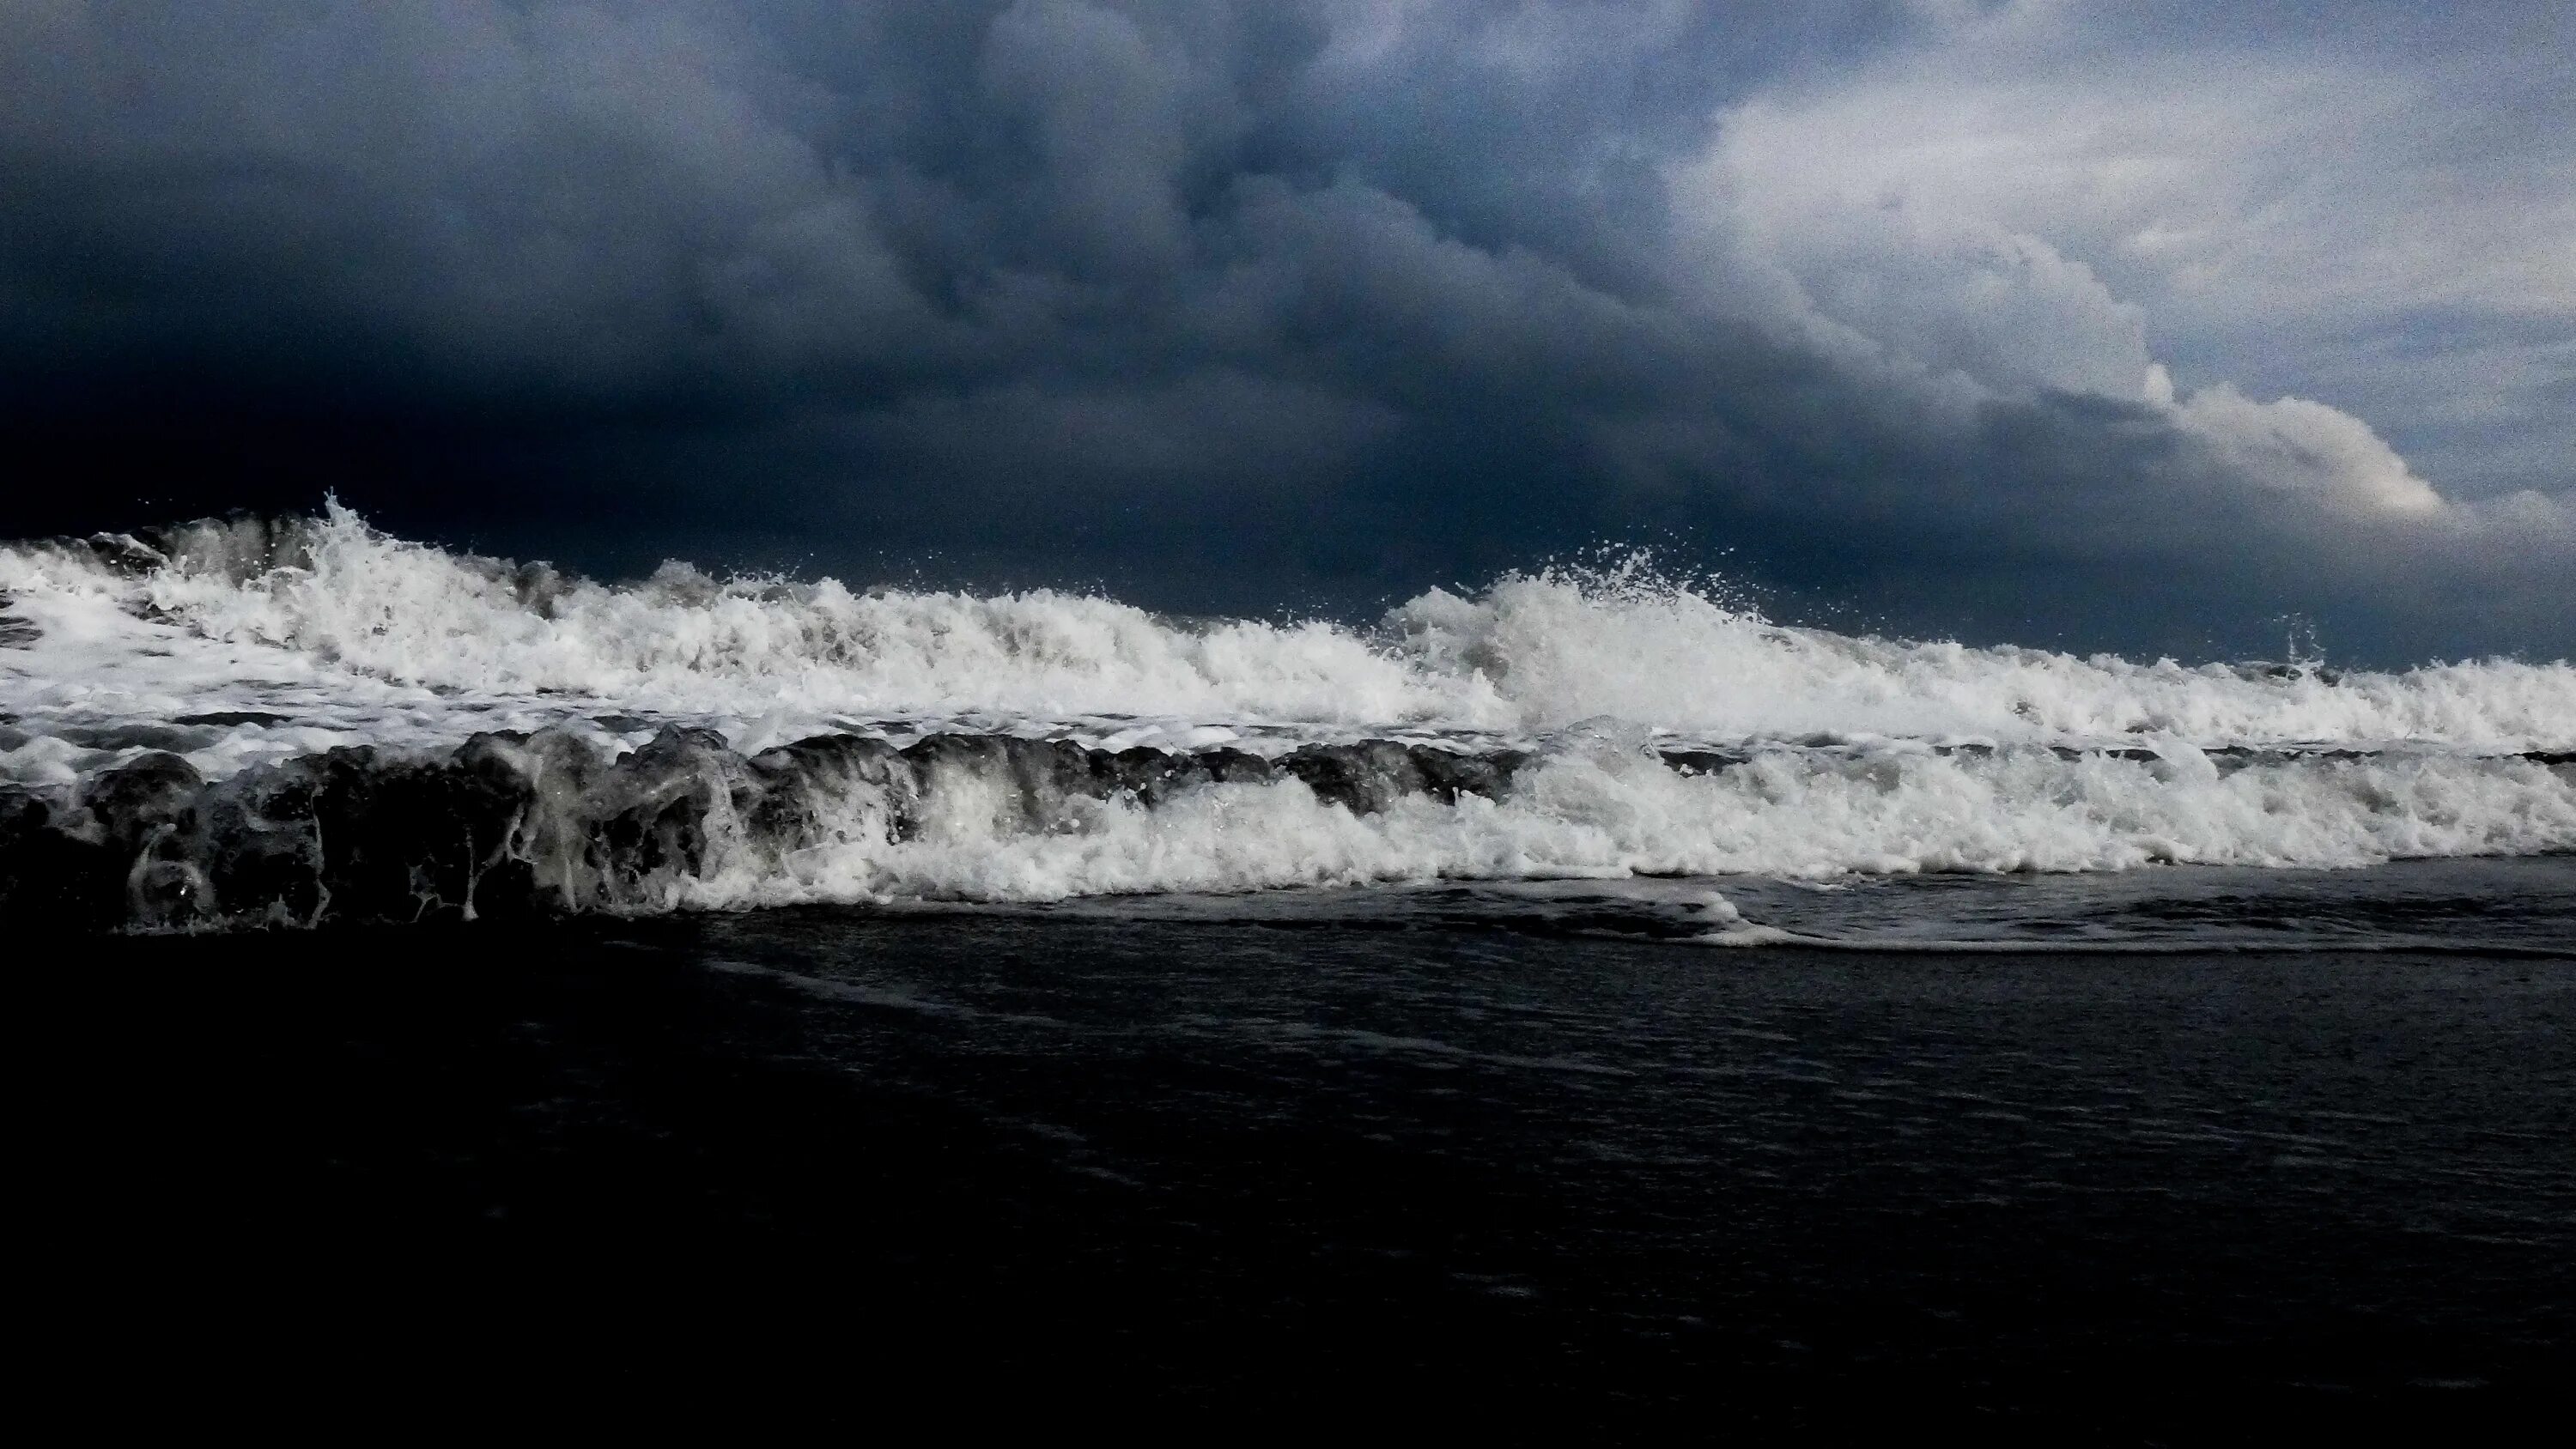 Море шторм. Море, волны. Морская буря. Шторм в океане. Шторм на берегу океана